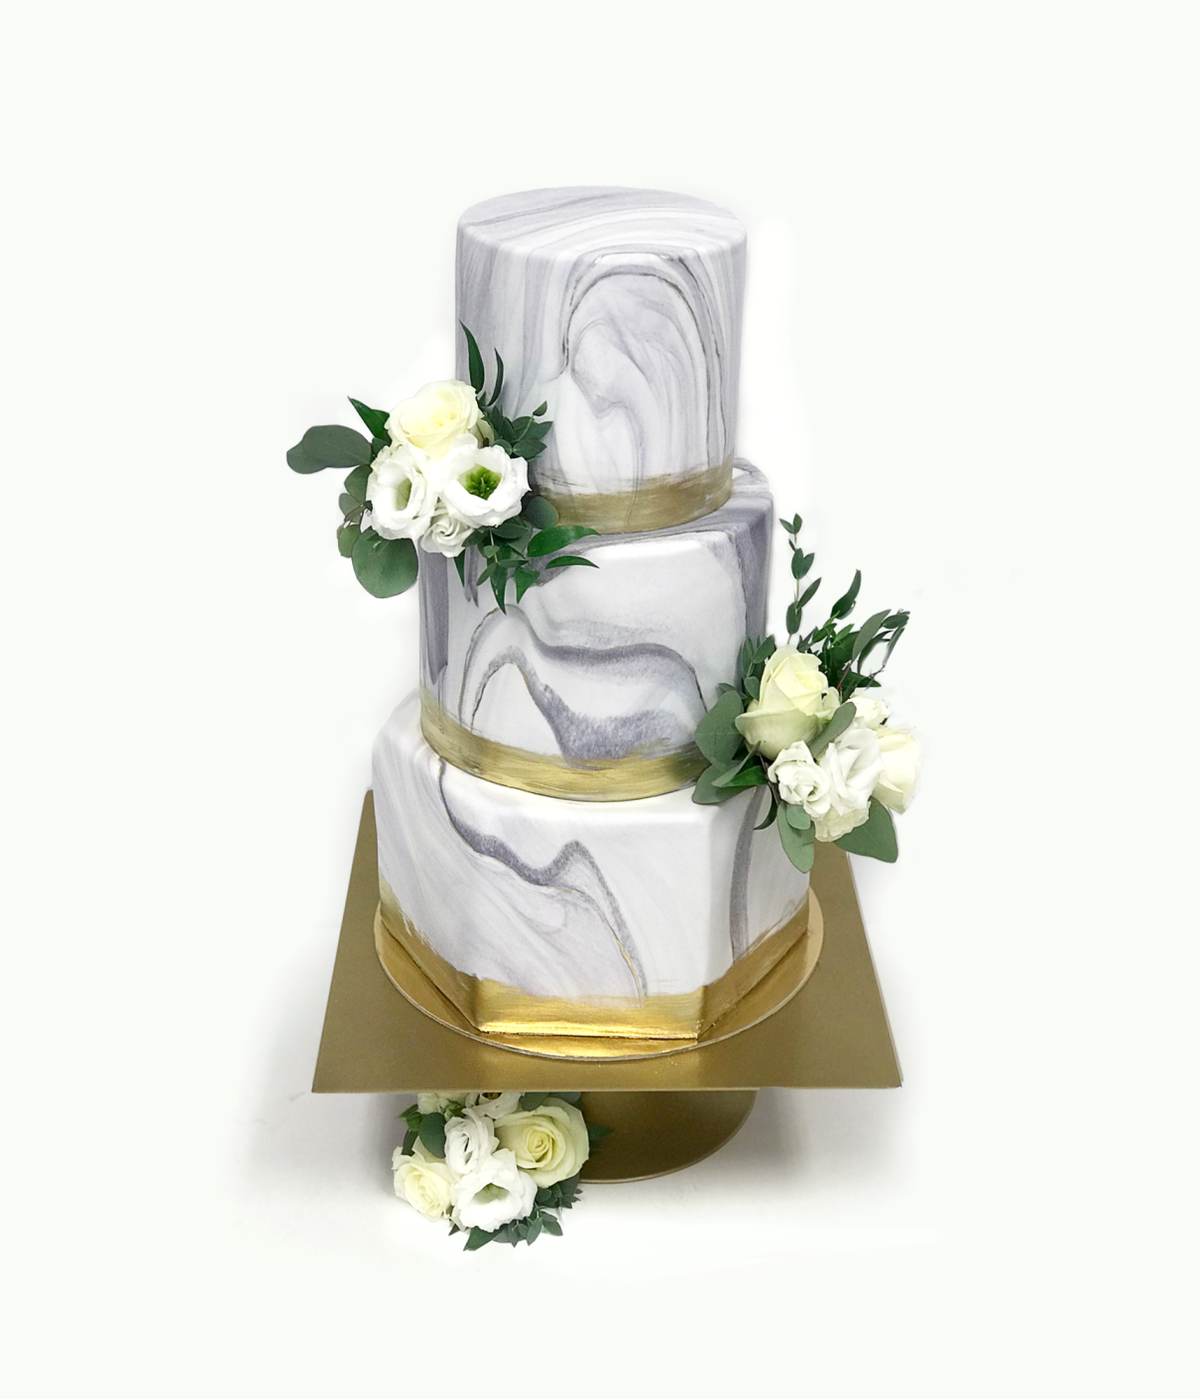 Whippt Desserts - wedding cake Aug 2018 - flowers Creative Edge